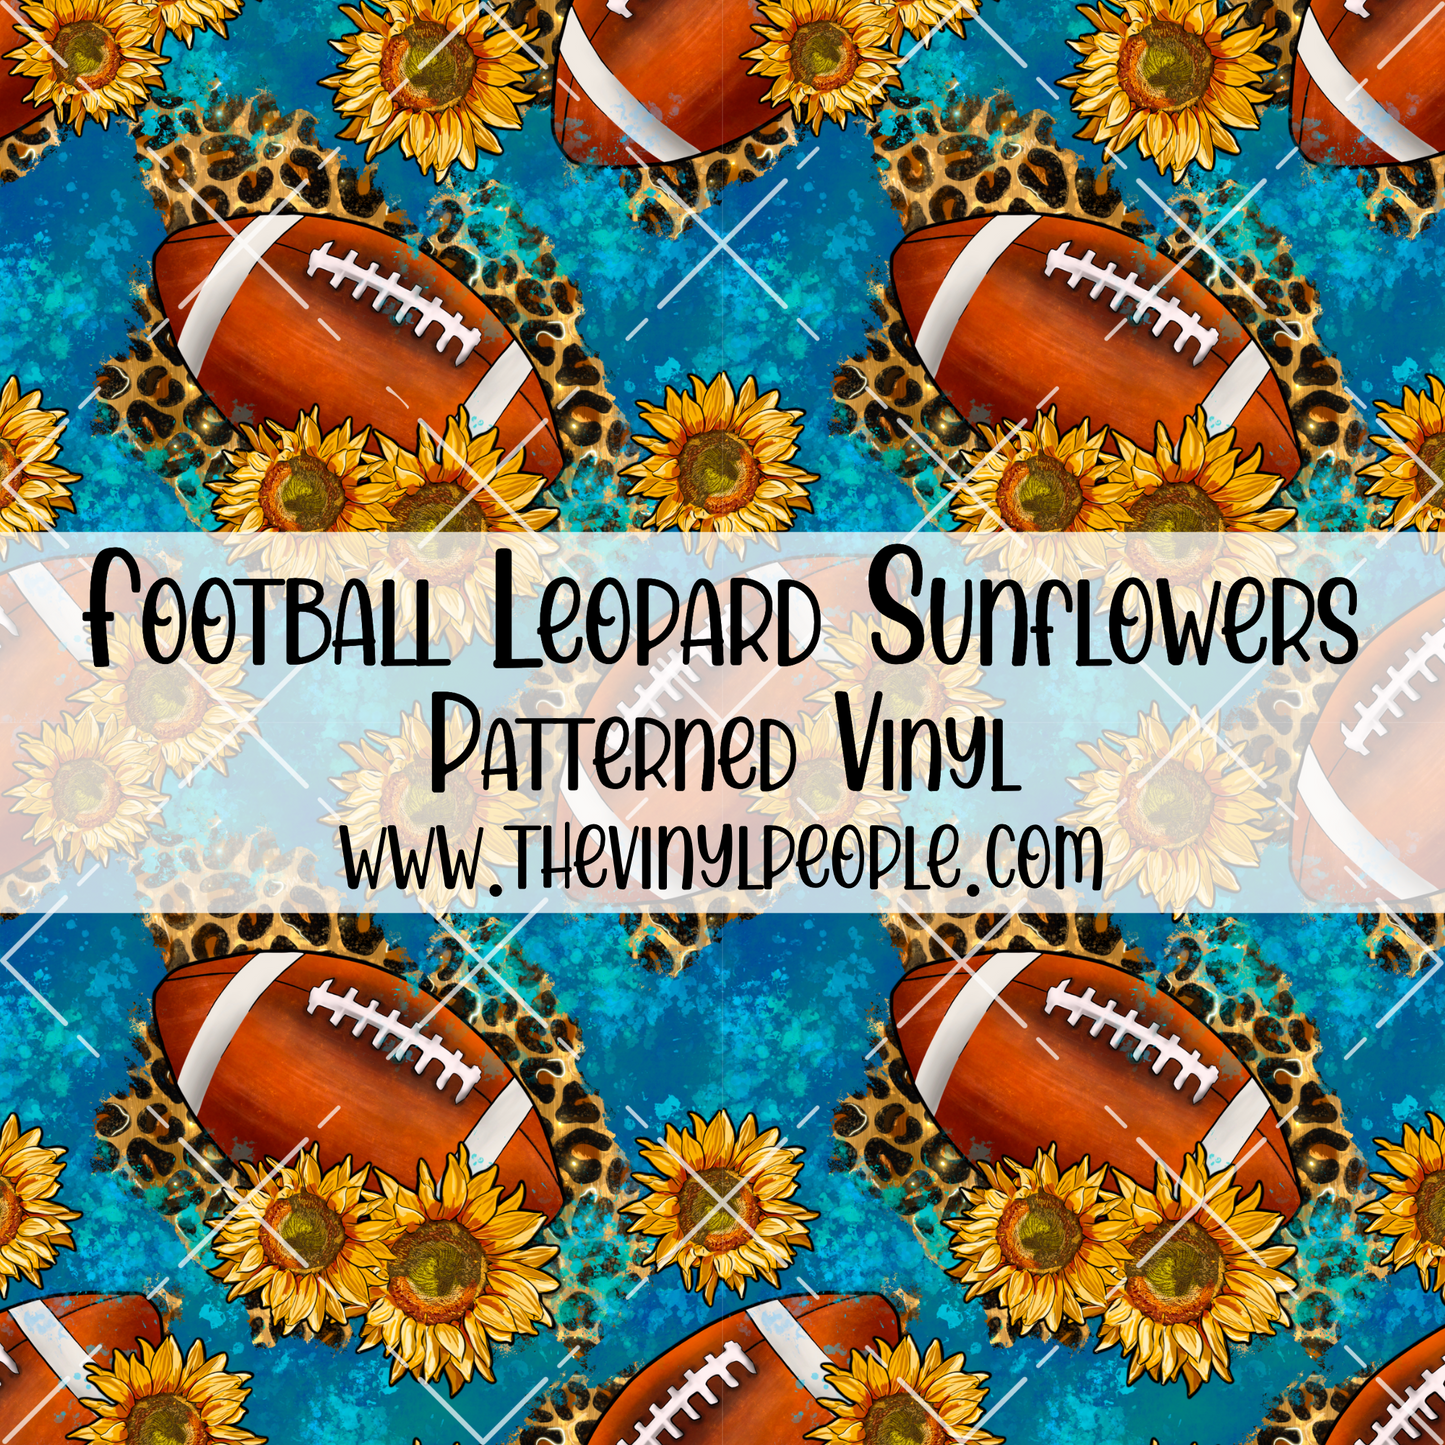 Football Leopard Sunflowers Patterned Vinyl